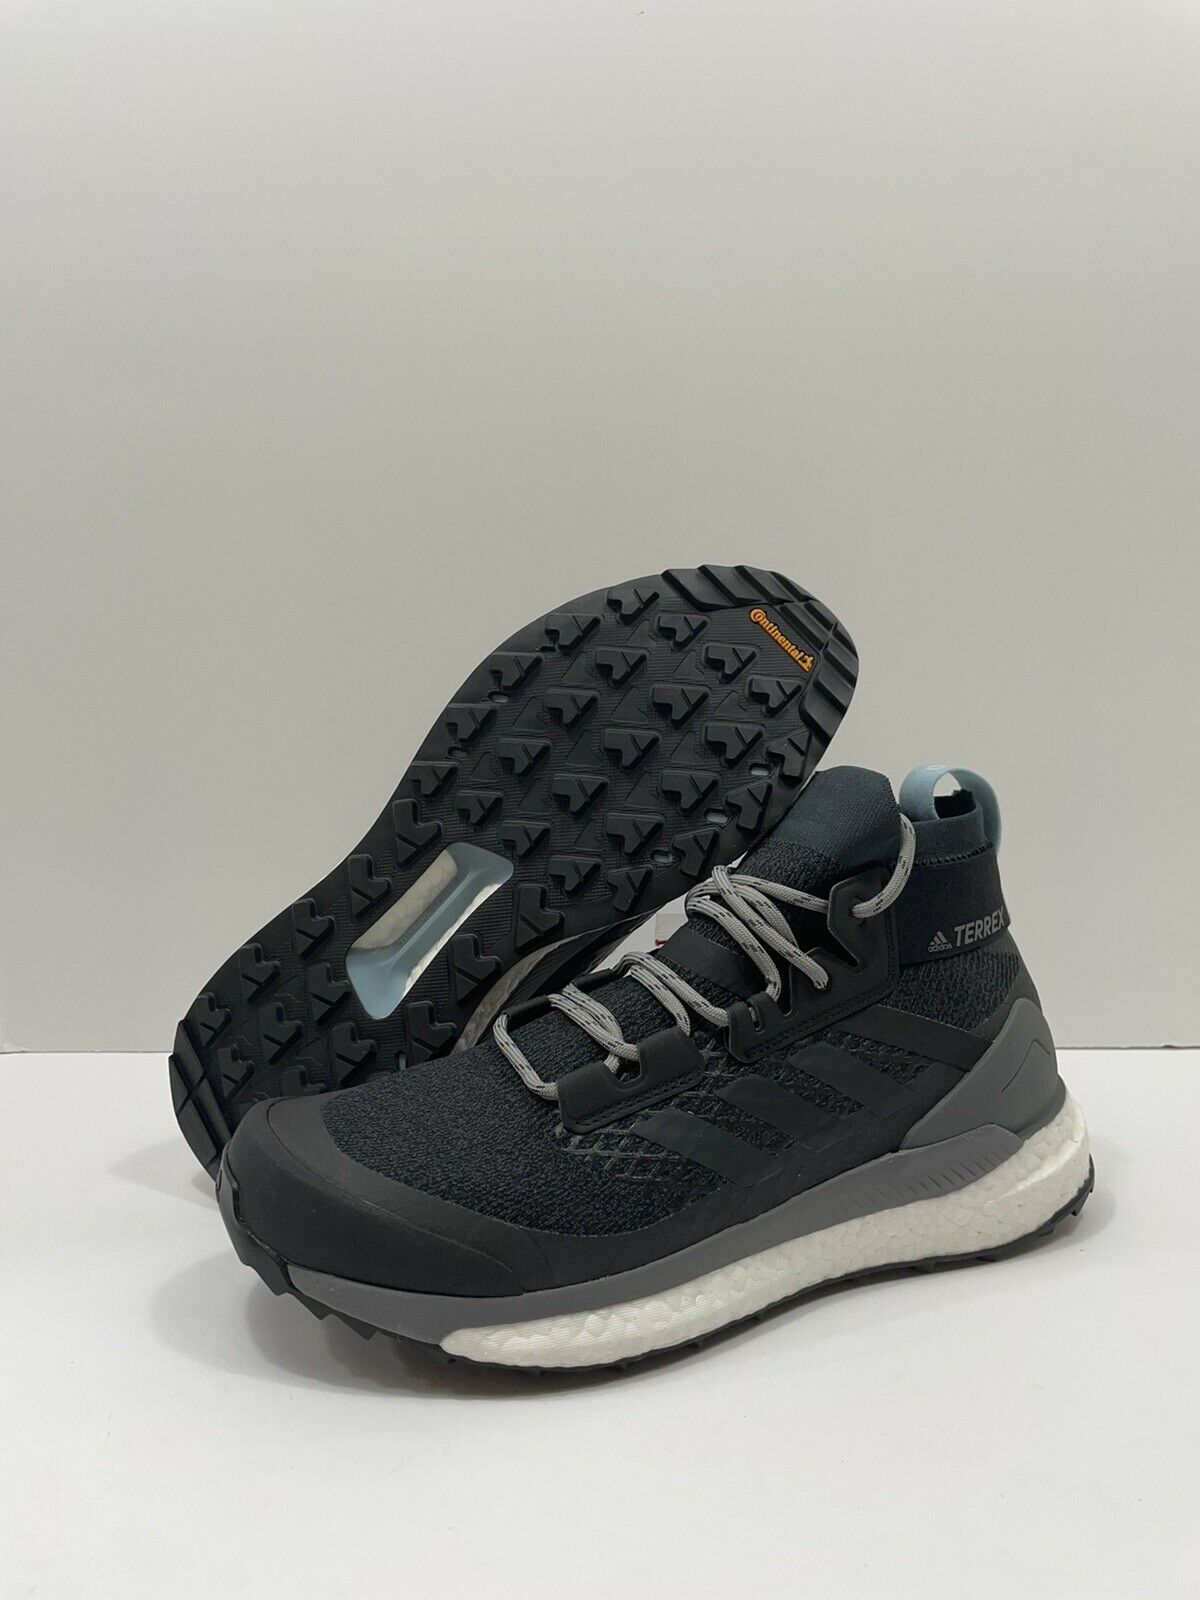 Adidas Terrex Free Hiker Women’s Size 9 Outdoor Hiking Trail Shoes Grey G28417